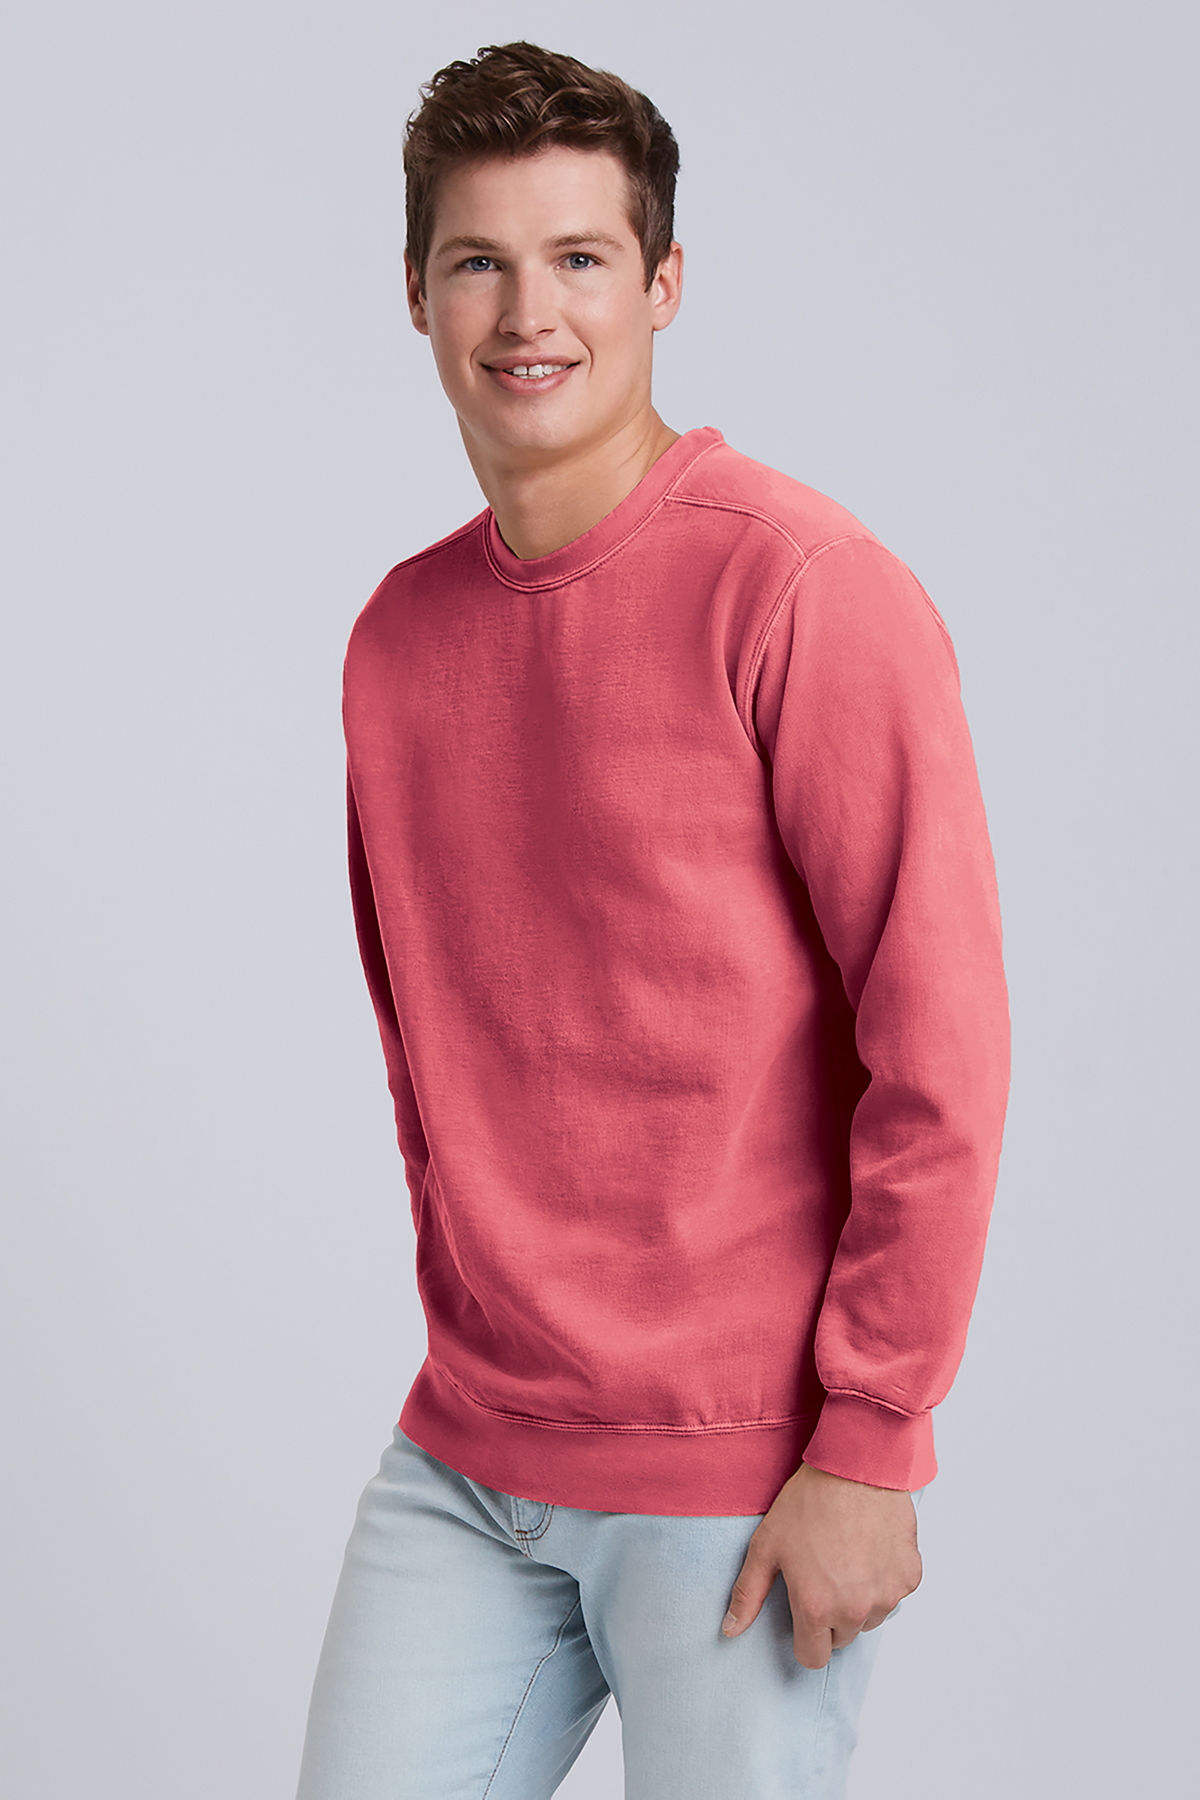 Comfort Colors 1566 - Garment-Dyed Sweatshirt